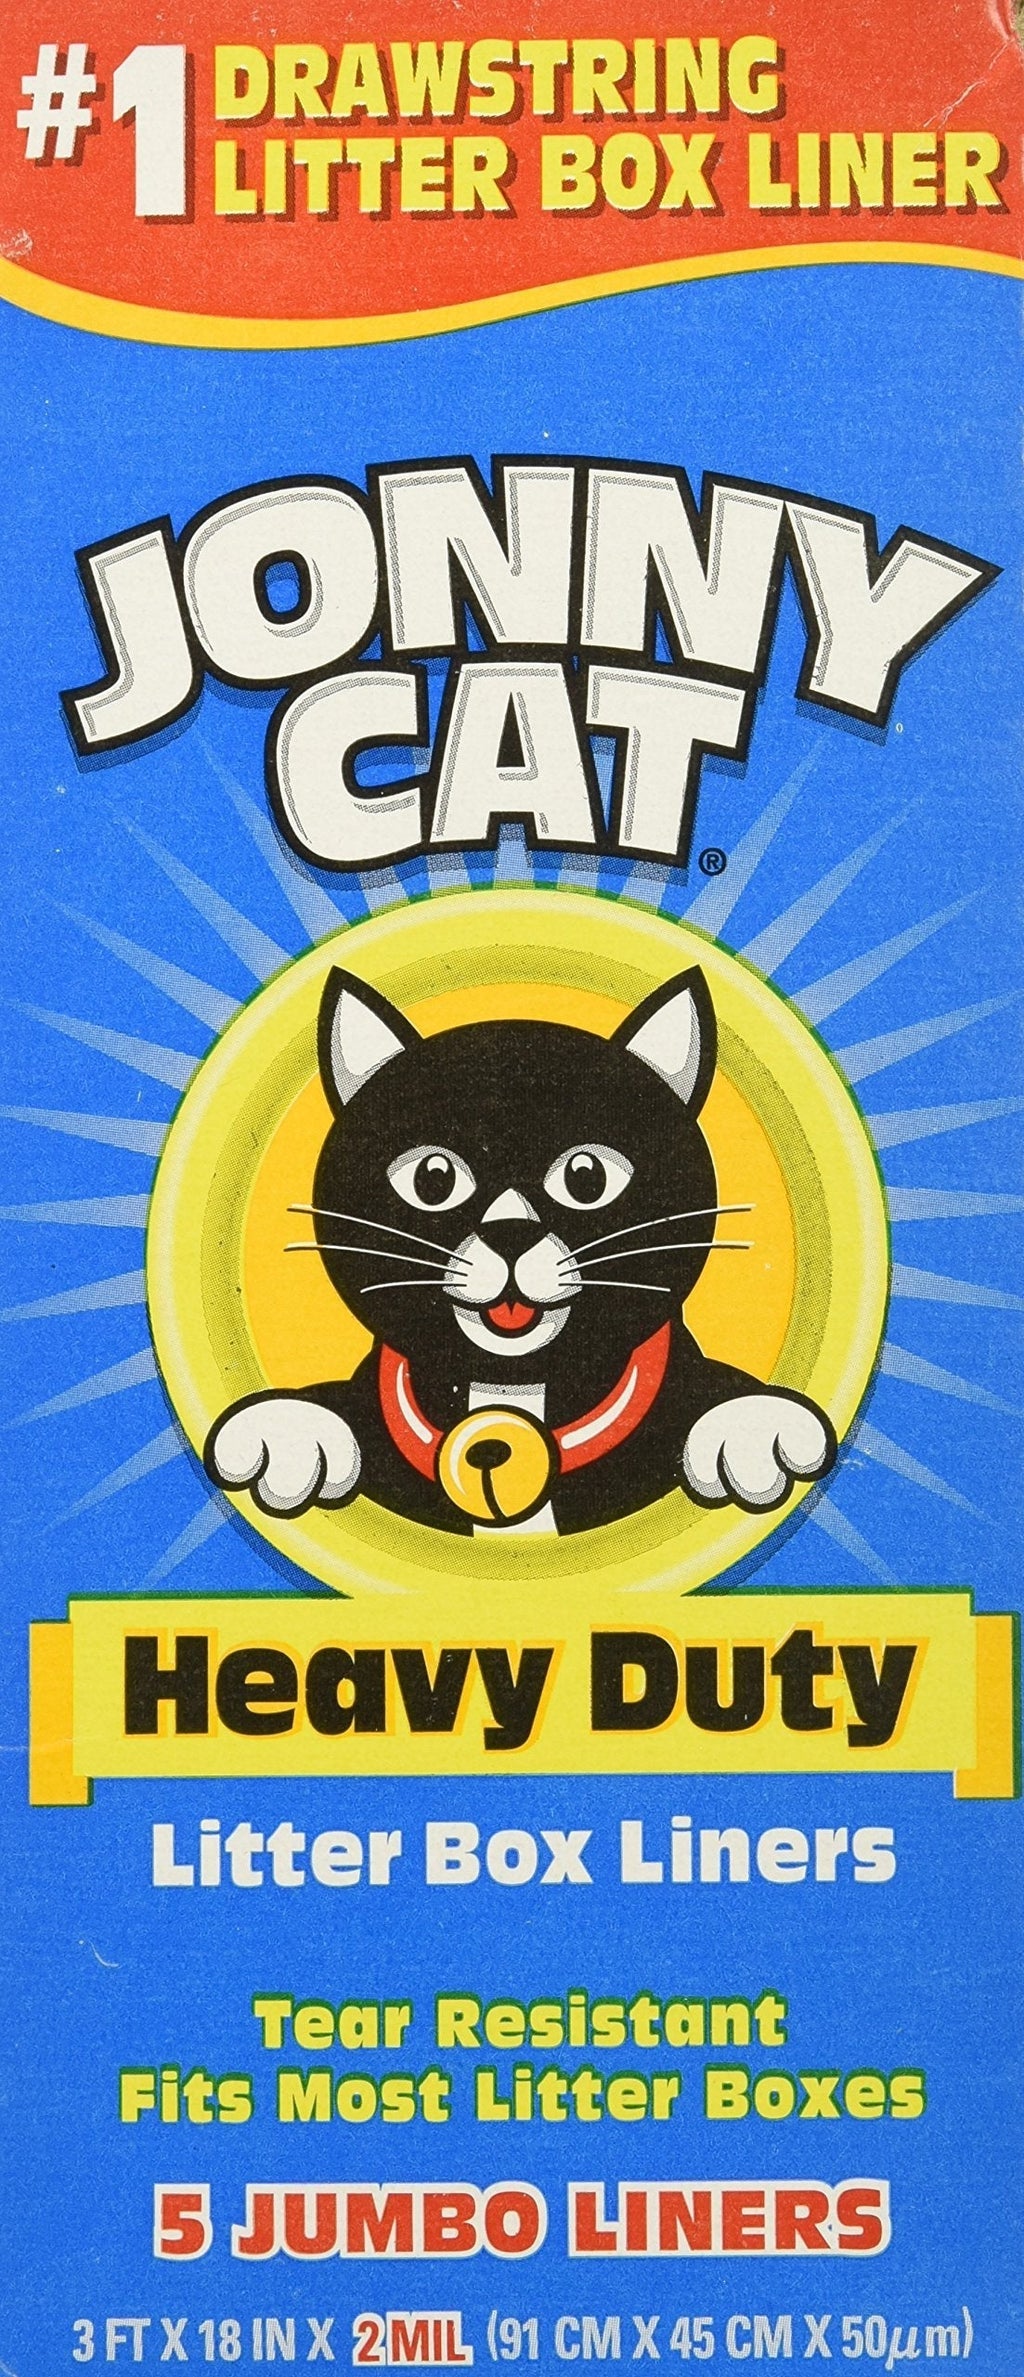 [Australia] - JONNY CAT Cat Litter Box Liners 5per Box - 2 Pack (Total 10 Liners) 1 